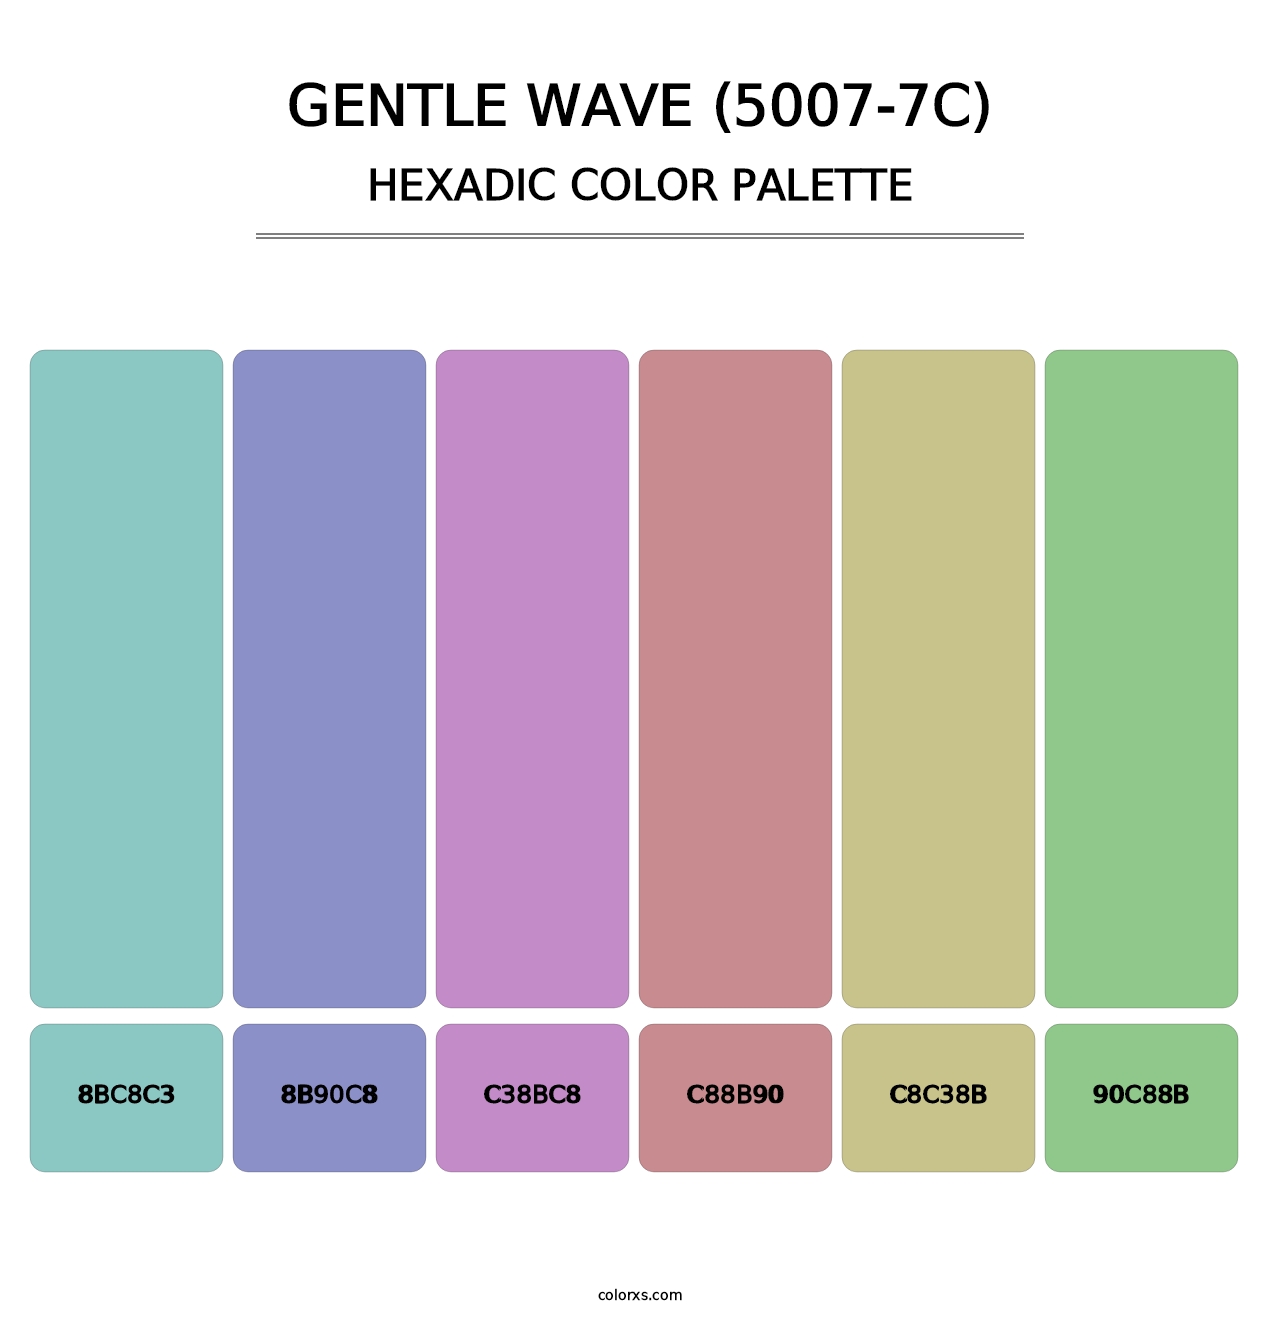 Gentle Wave (5007-7C) - Hexadic Color Palette